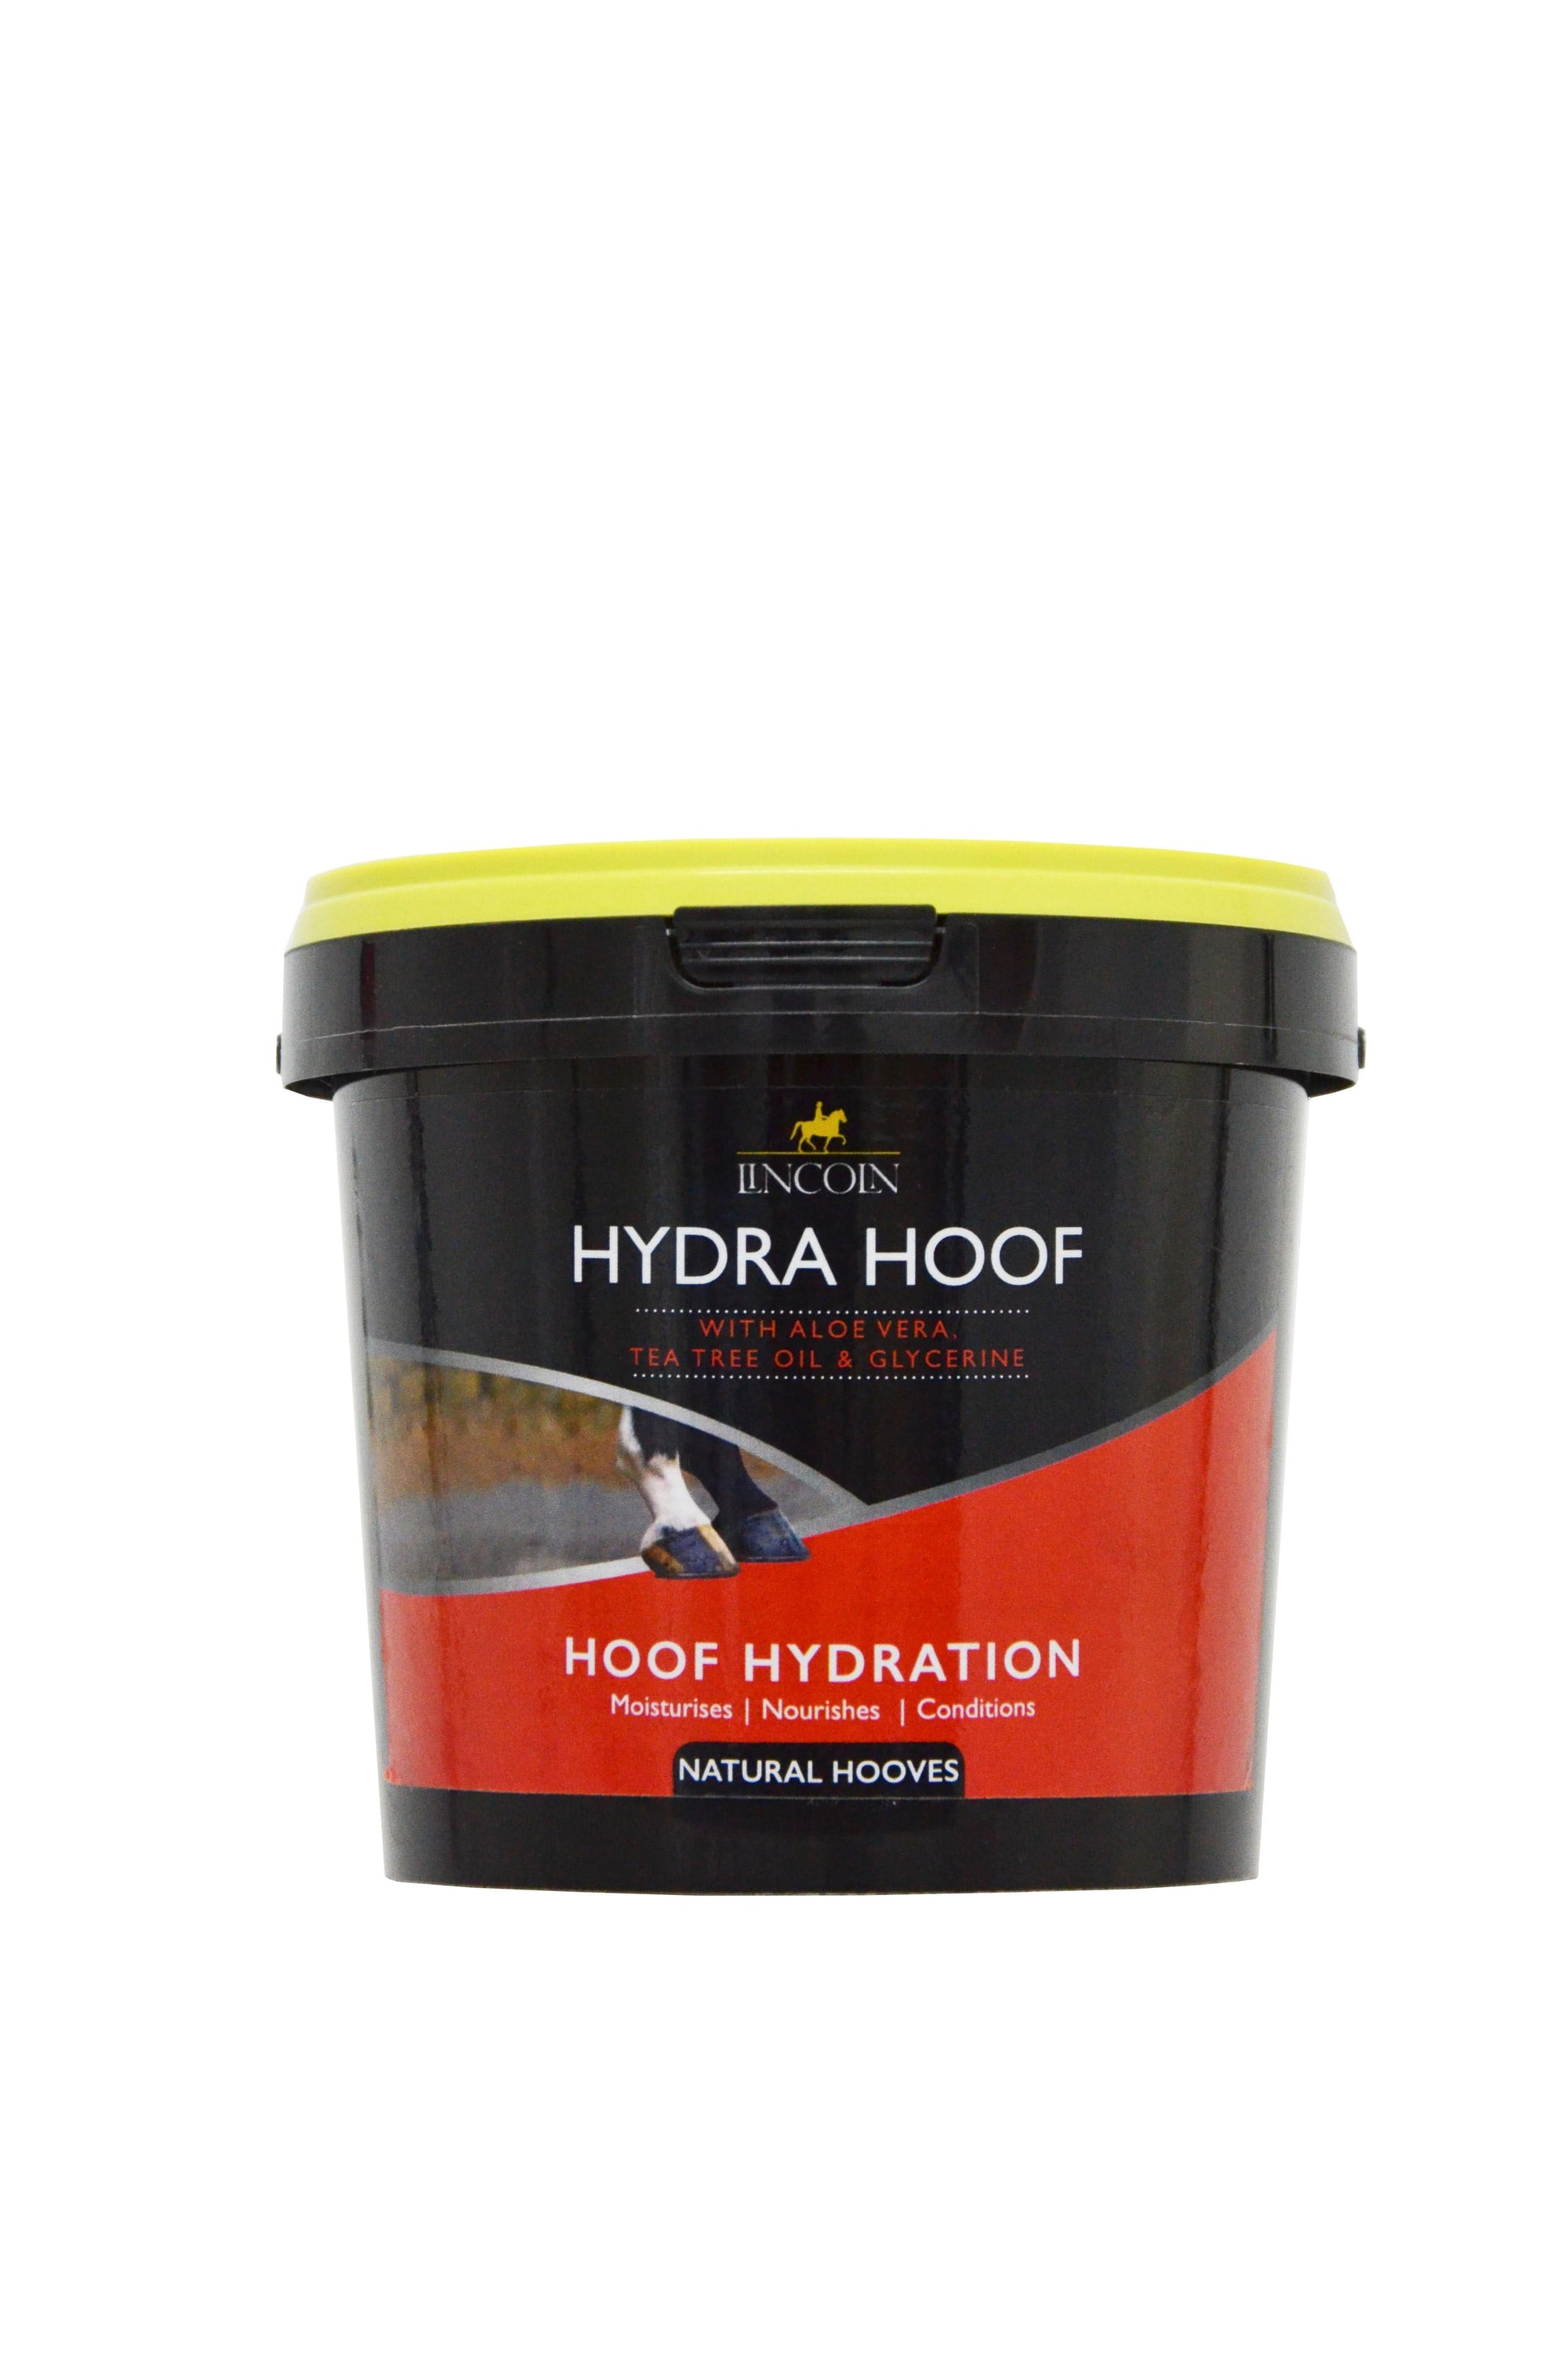 Lincoln hydra hoof limited editon